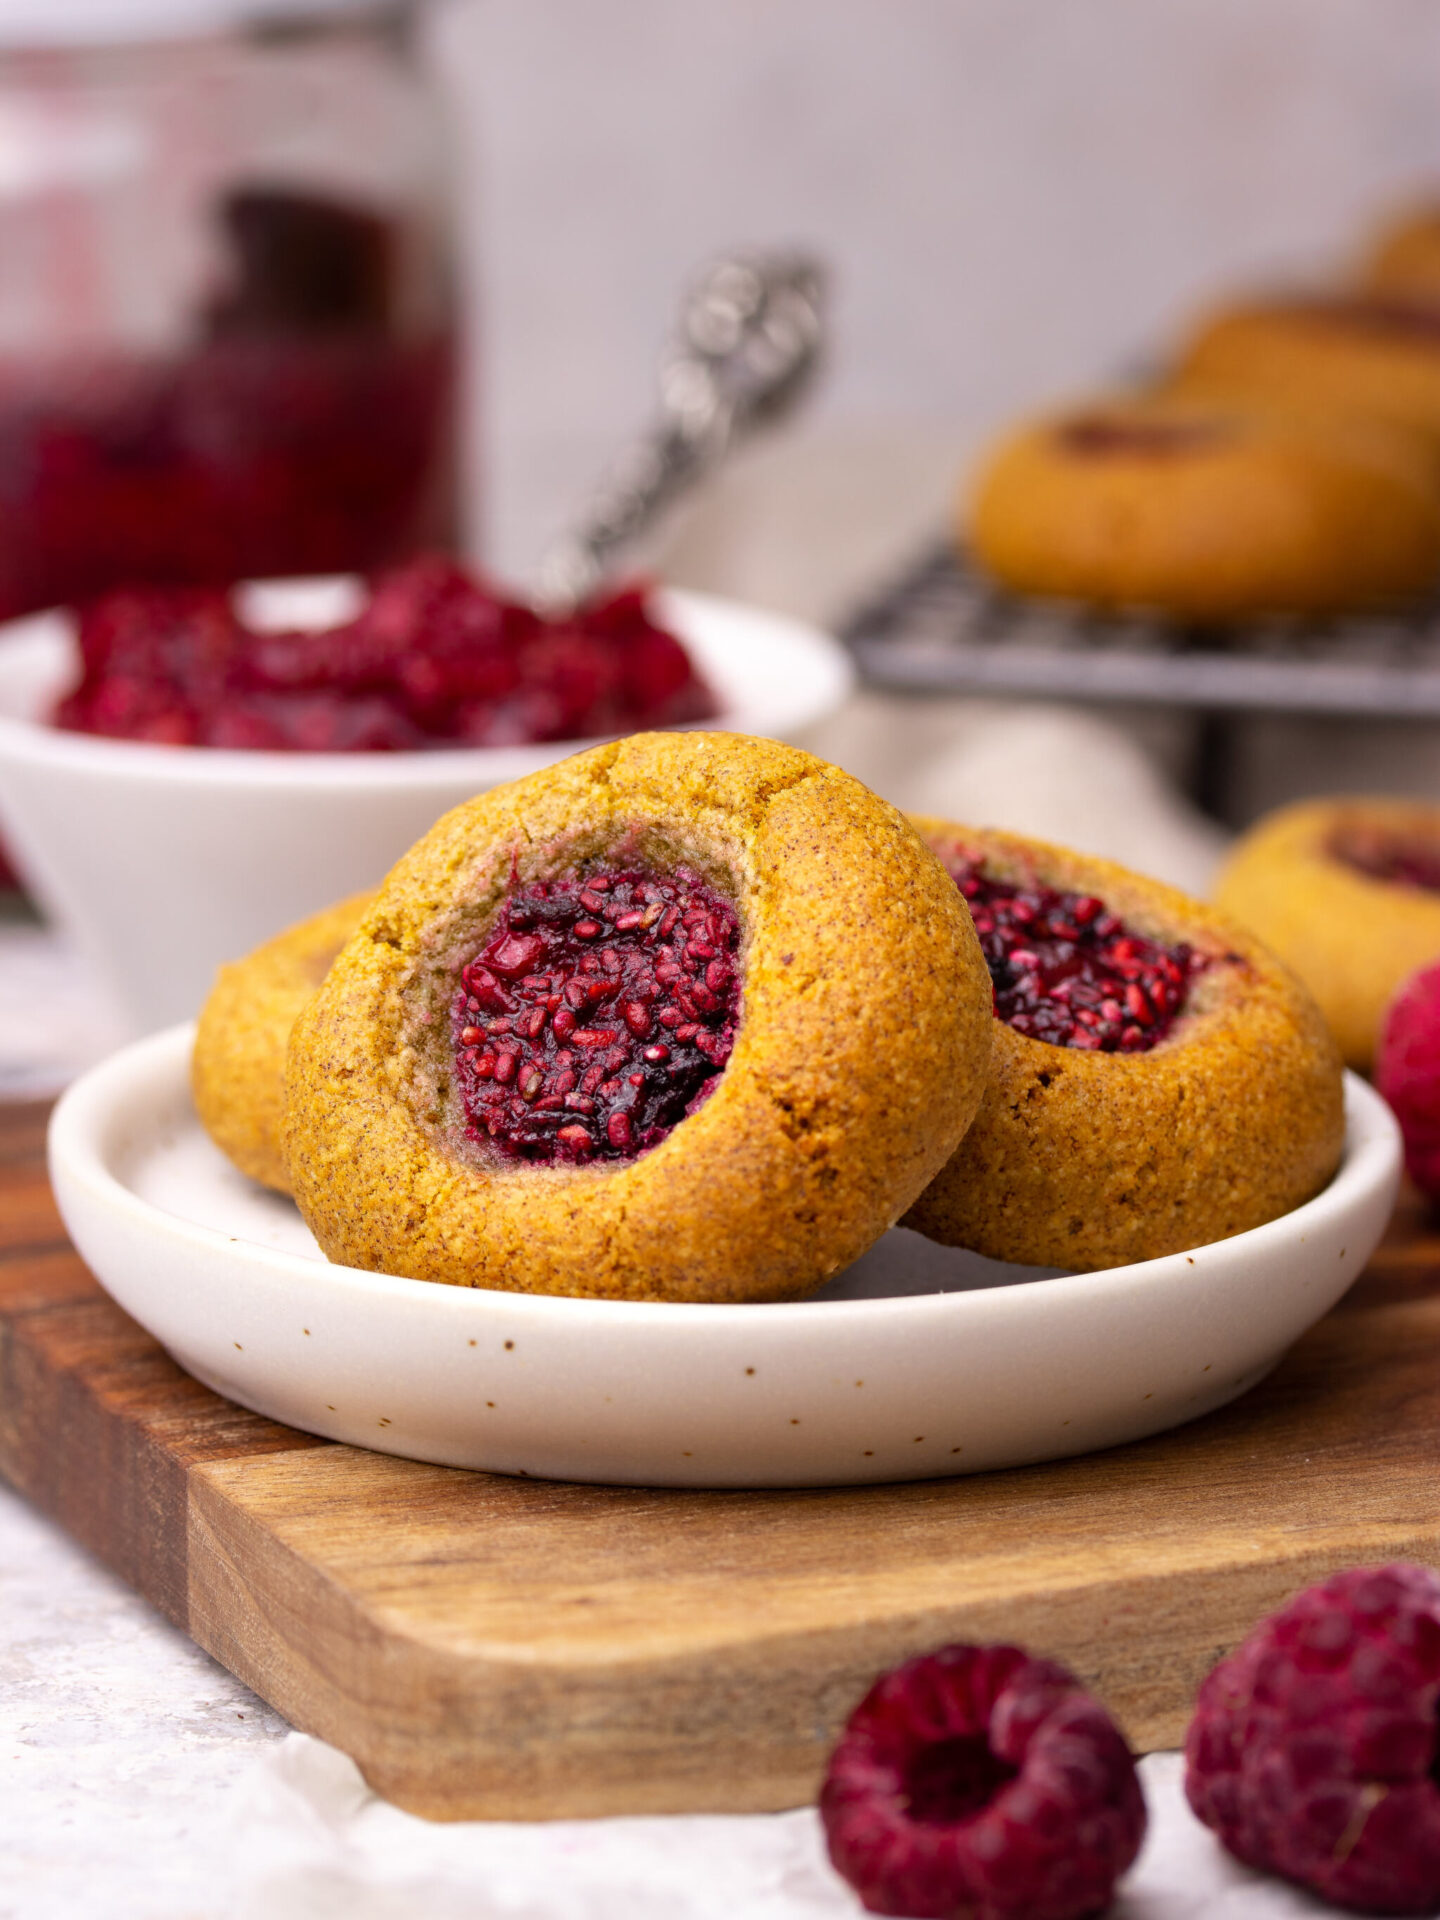 Raspberry Thumbprint Cookies – “Syltkakor” – On the Healthier Side